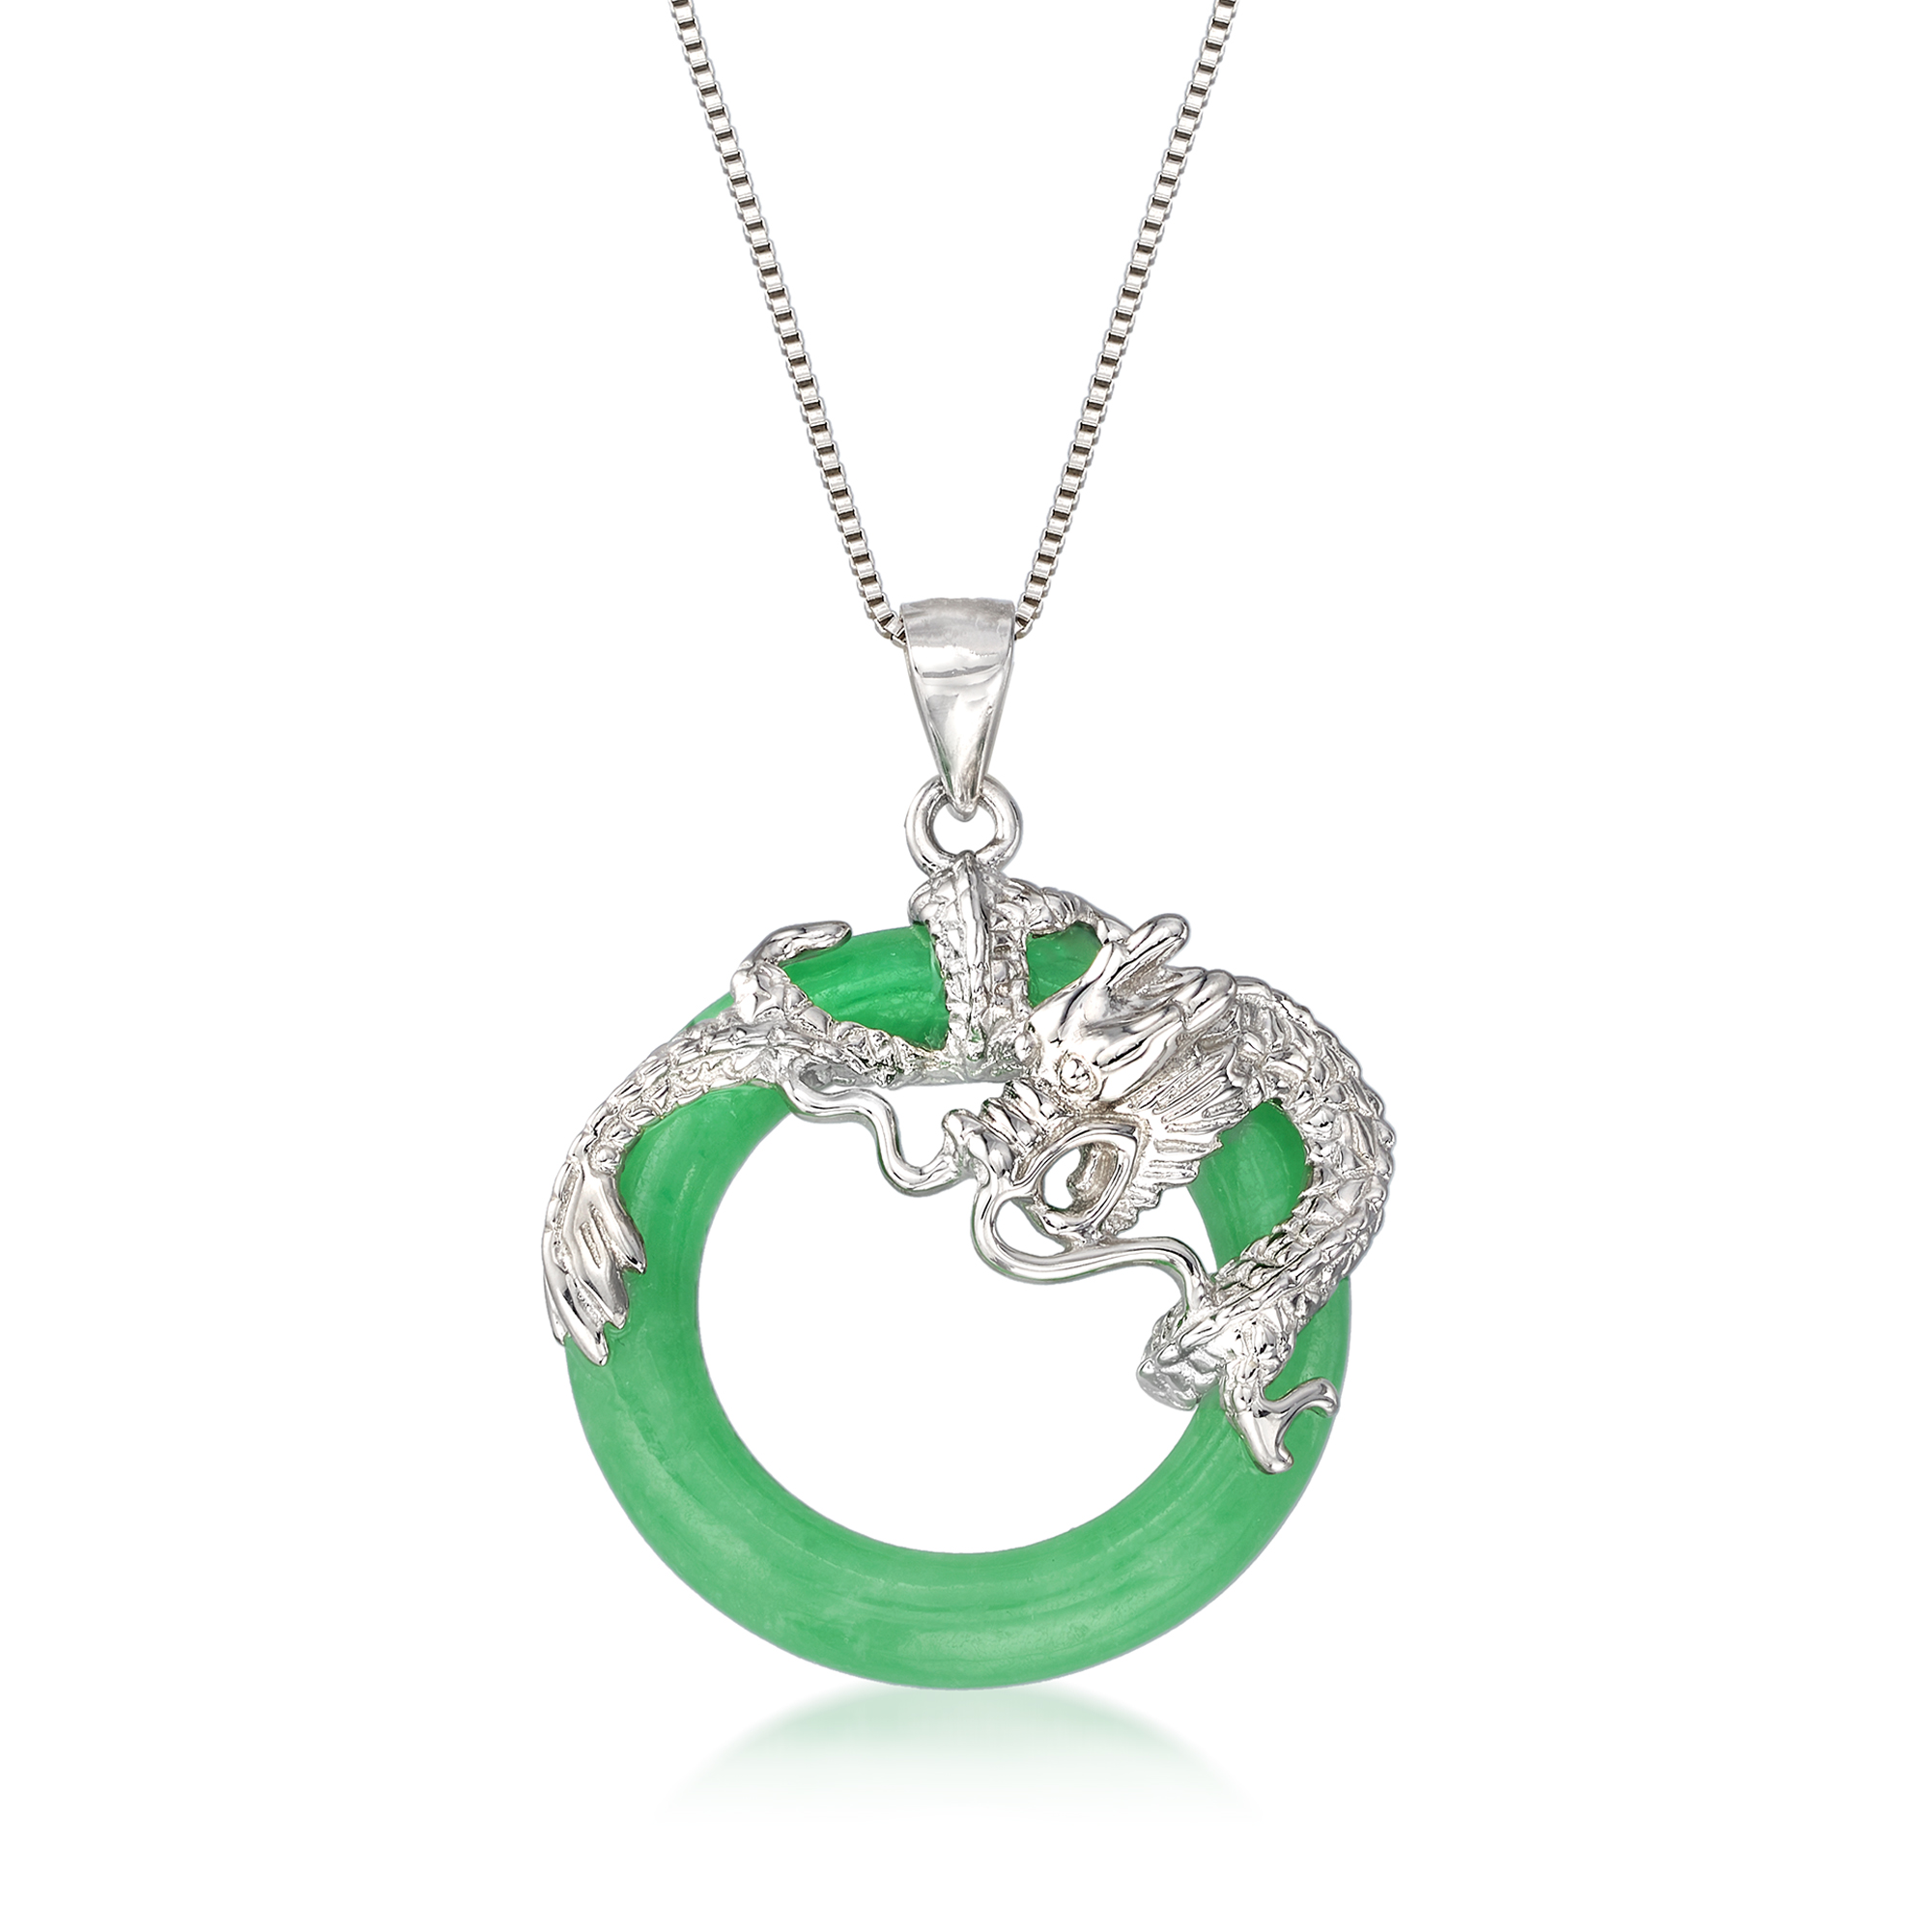 Details about   Elegant Celadon Jade & Garnet Fan Shaped JOY Pendant Necklace Sterling Silver CZ 